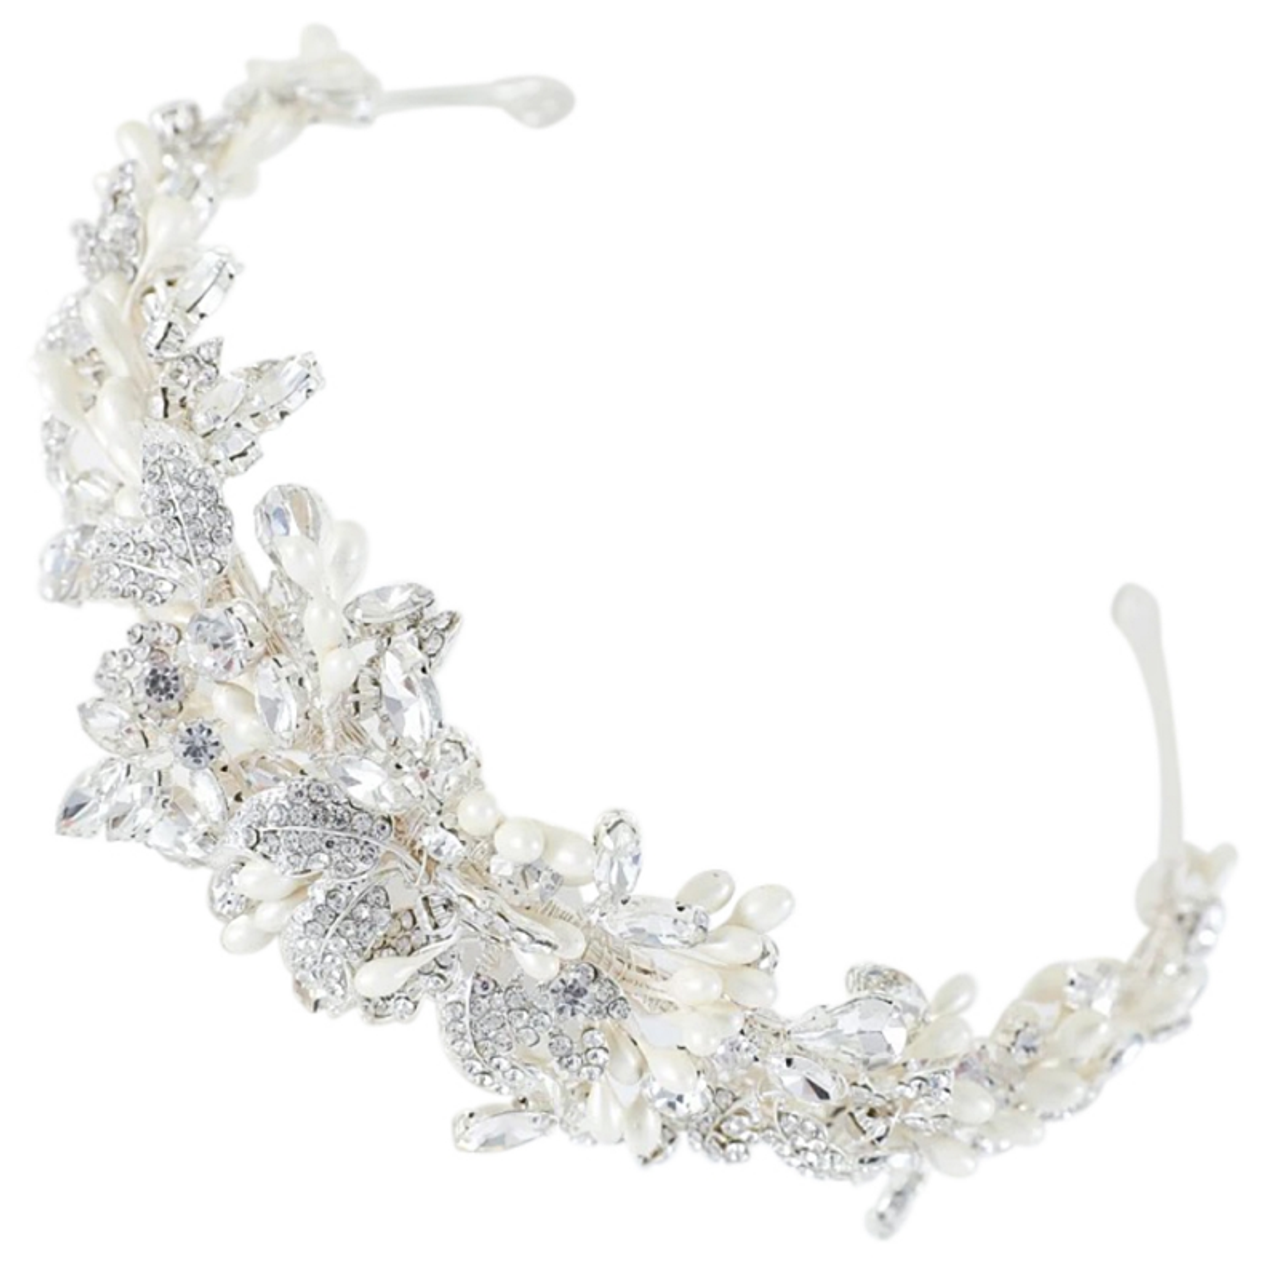 Ribbon Style Bridal Headband HP 8204 White or Ivory